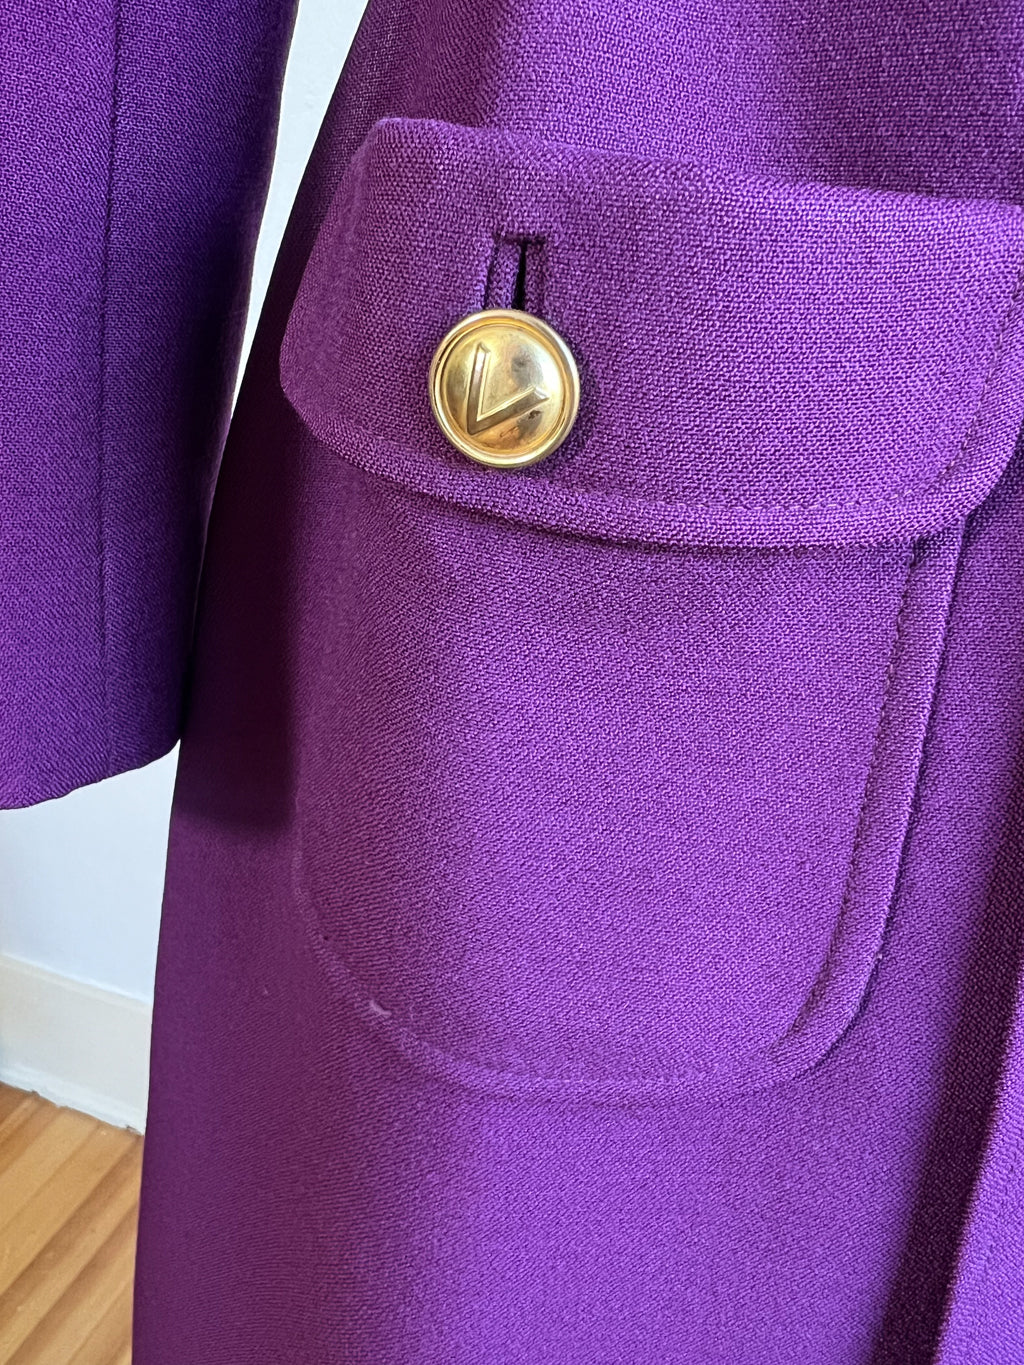 Vintage 1960s VALENTINO Designer Coat - Exquisite Mod Angular Wool Princess Coat in Aubergine Hue Size S - M